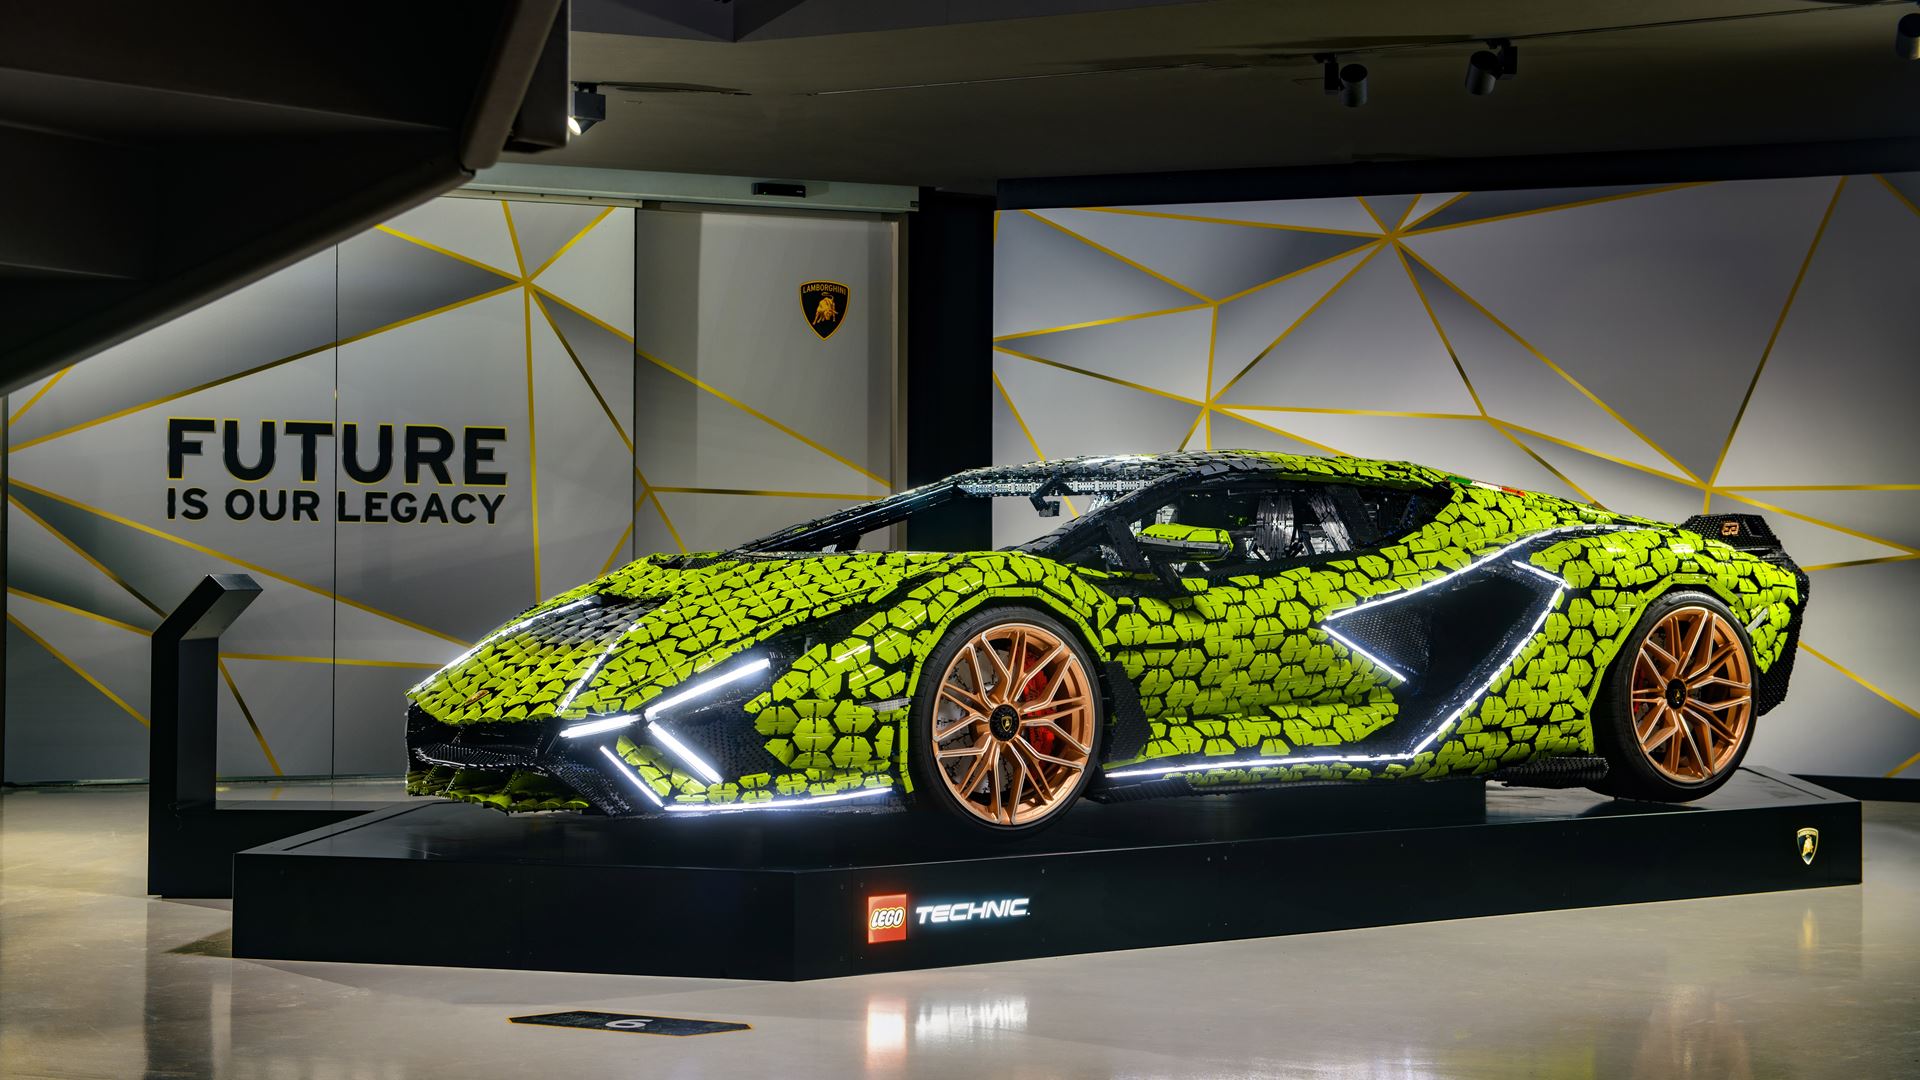 A 1:1 scale Lamborghini Sian FKP 37 built with 400,000 bricks on display at Museo Automobili Lamborghini